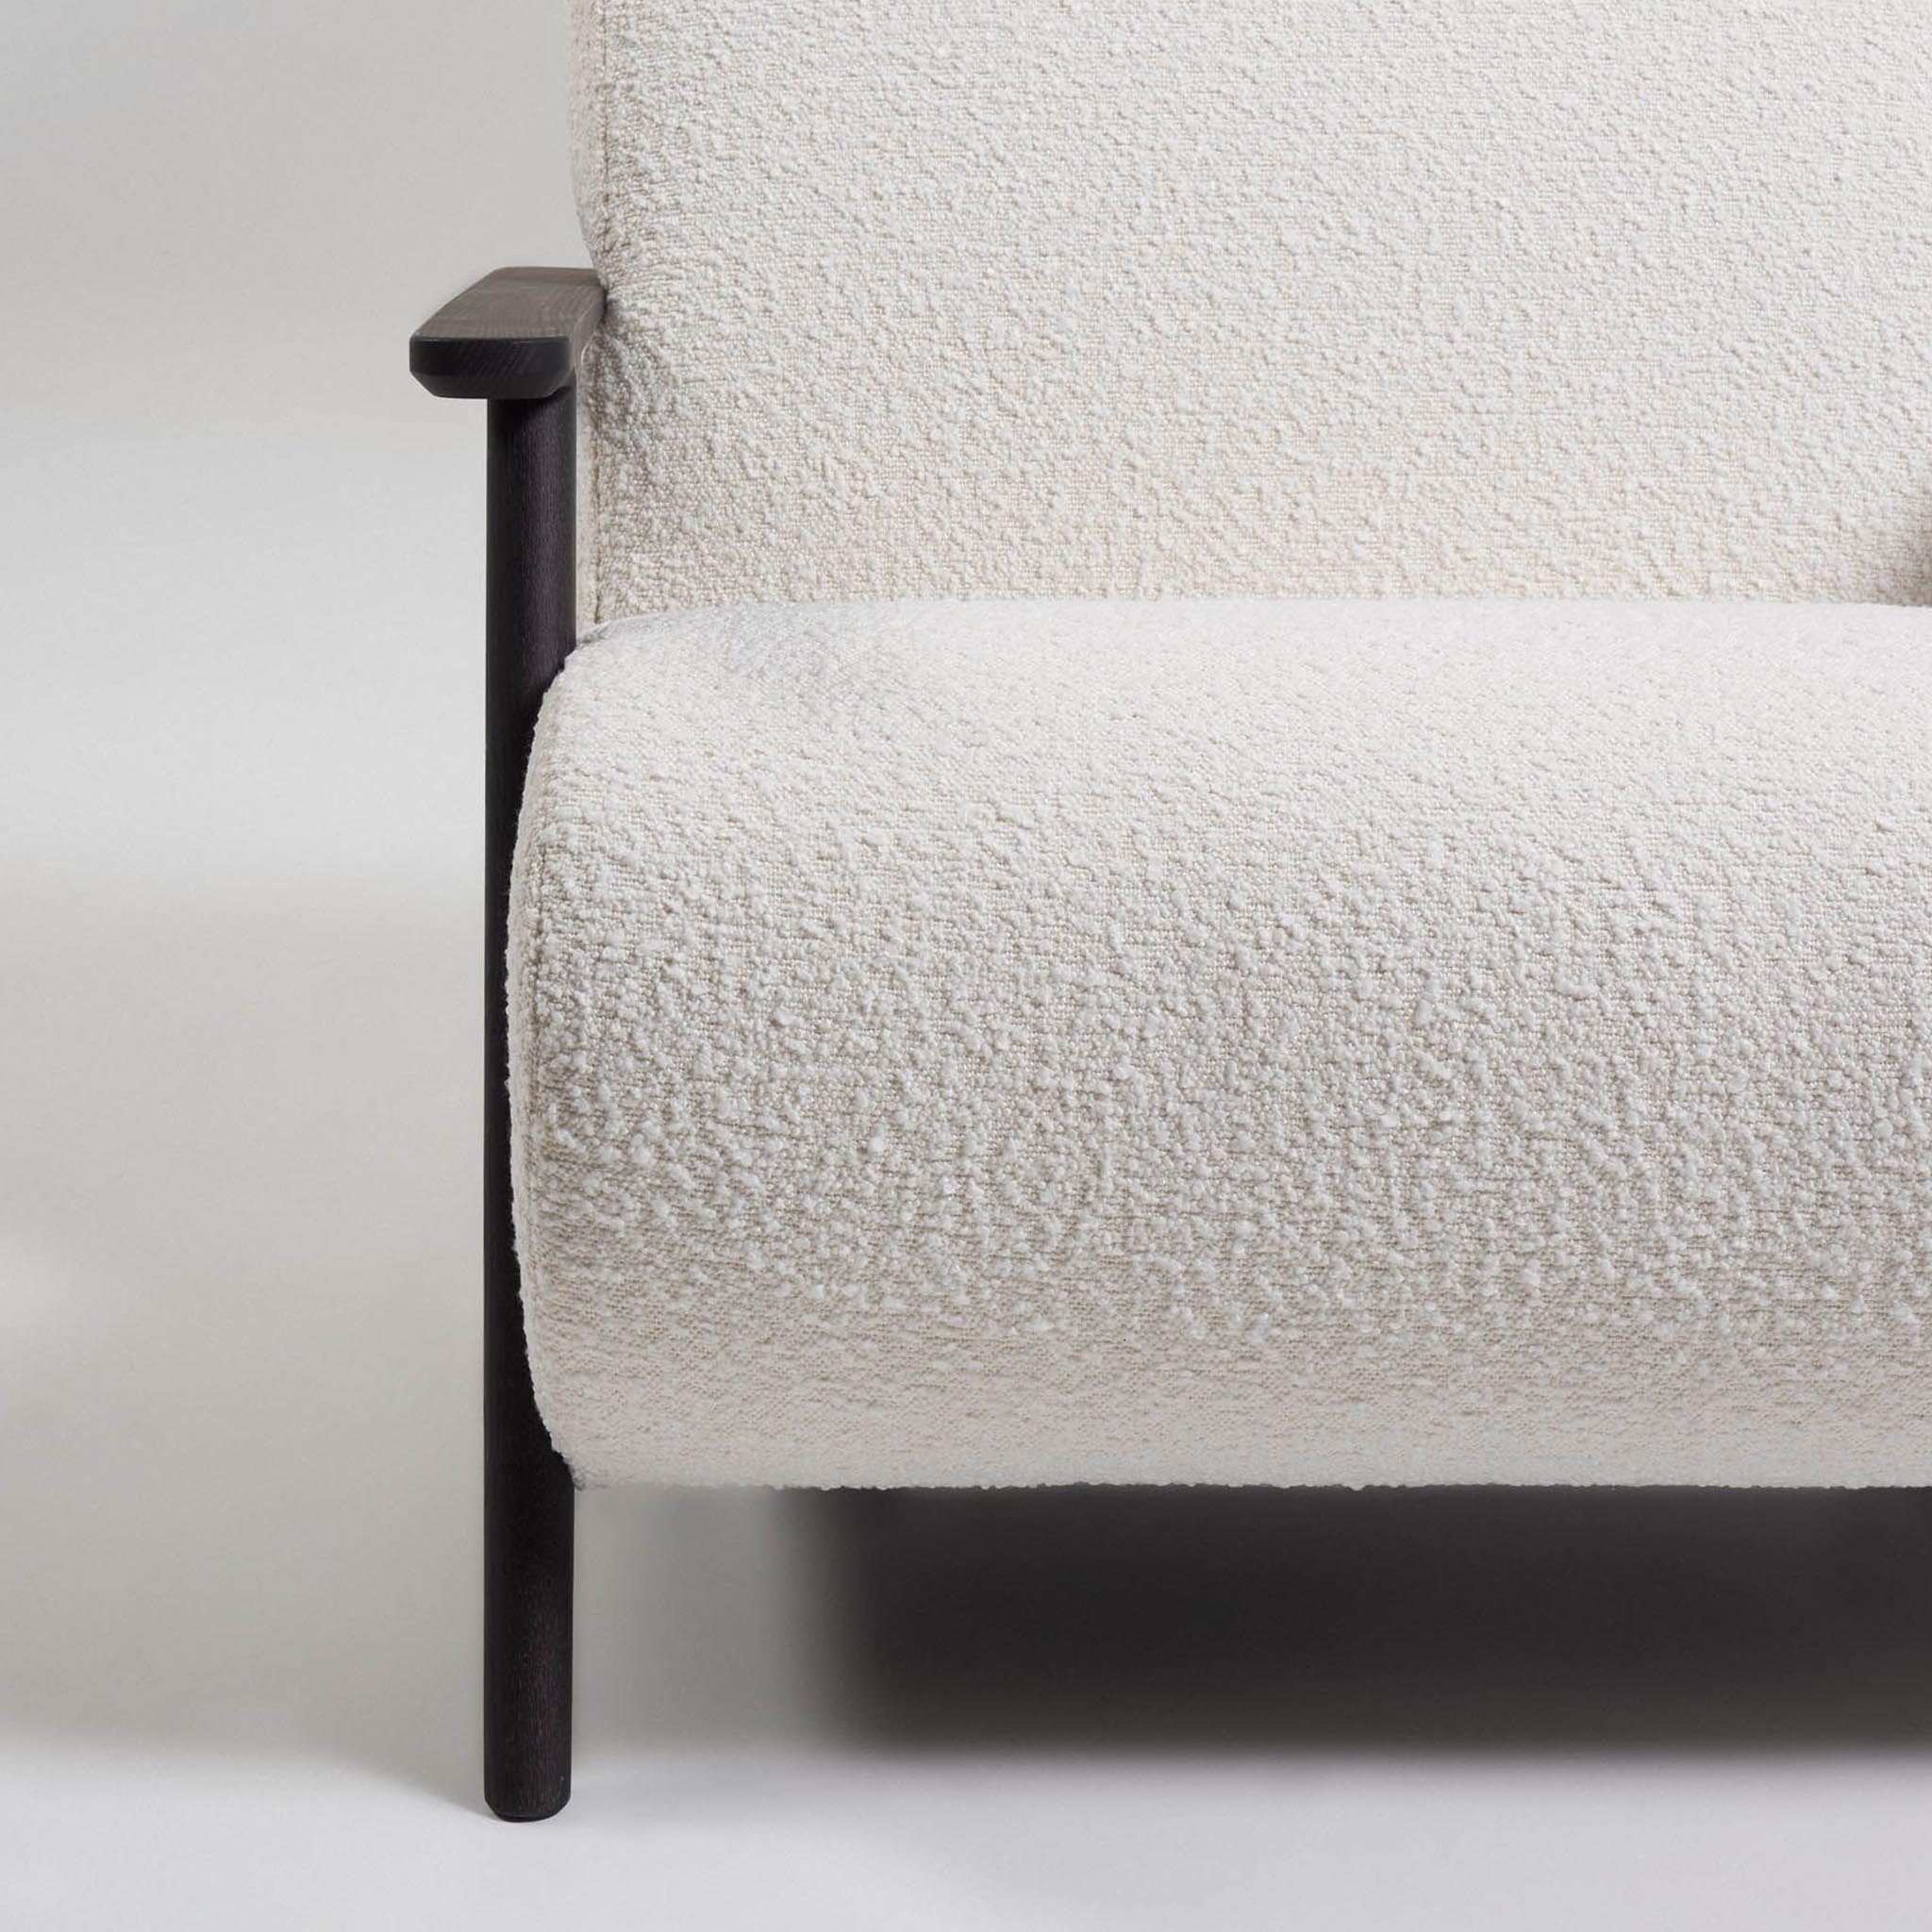  Kave Home Sessel Meghan - SKU #S516J33 in Farbe Weiß - Beine in Dunkelbraun - Material